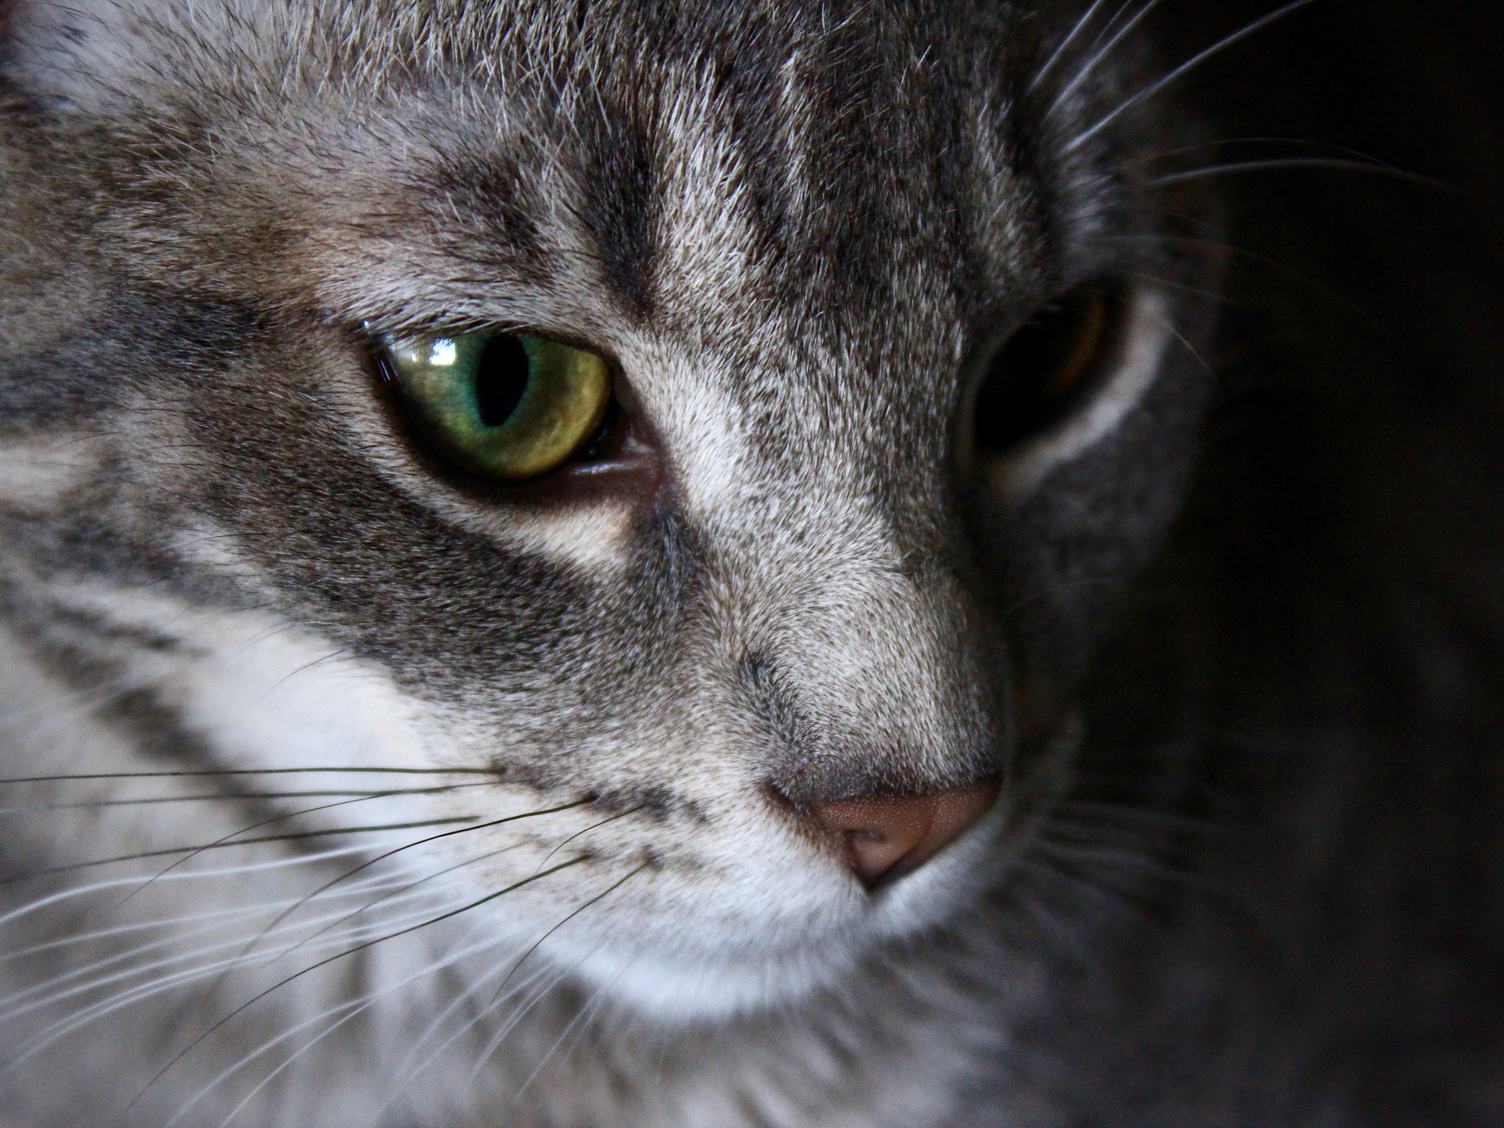 A Closeup of a Tabby Cat